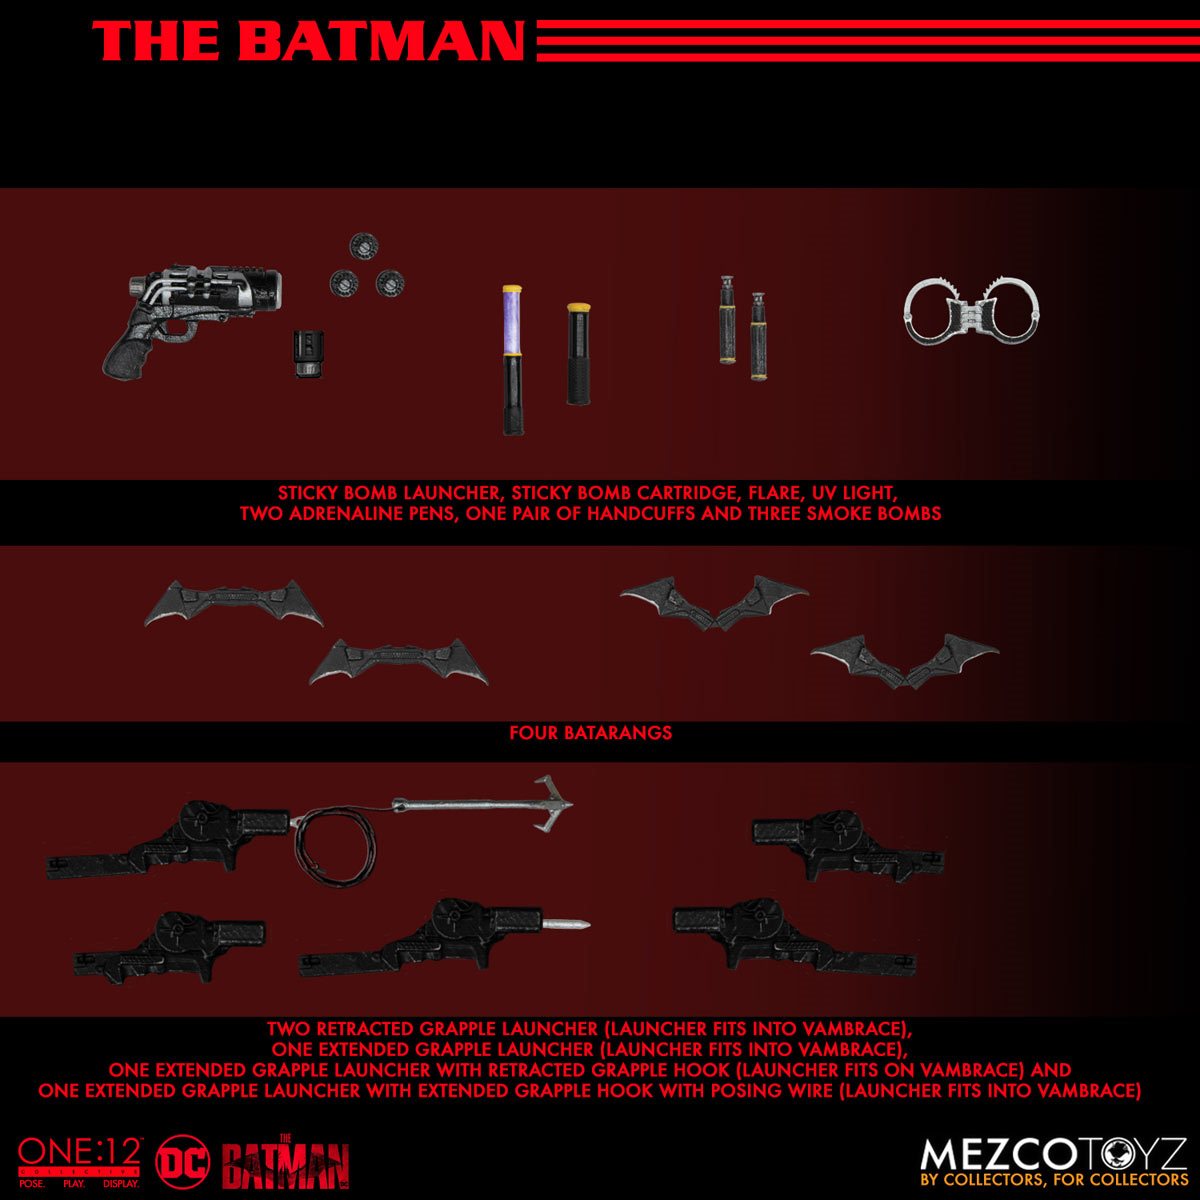 Pre-Orders for Batman 1989 One:12 Mezco Toyz Figure Goes Live